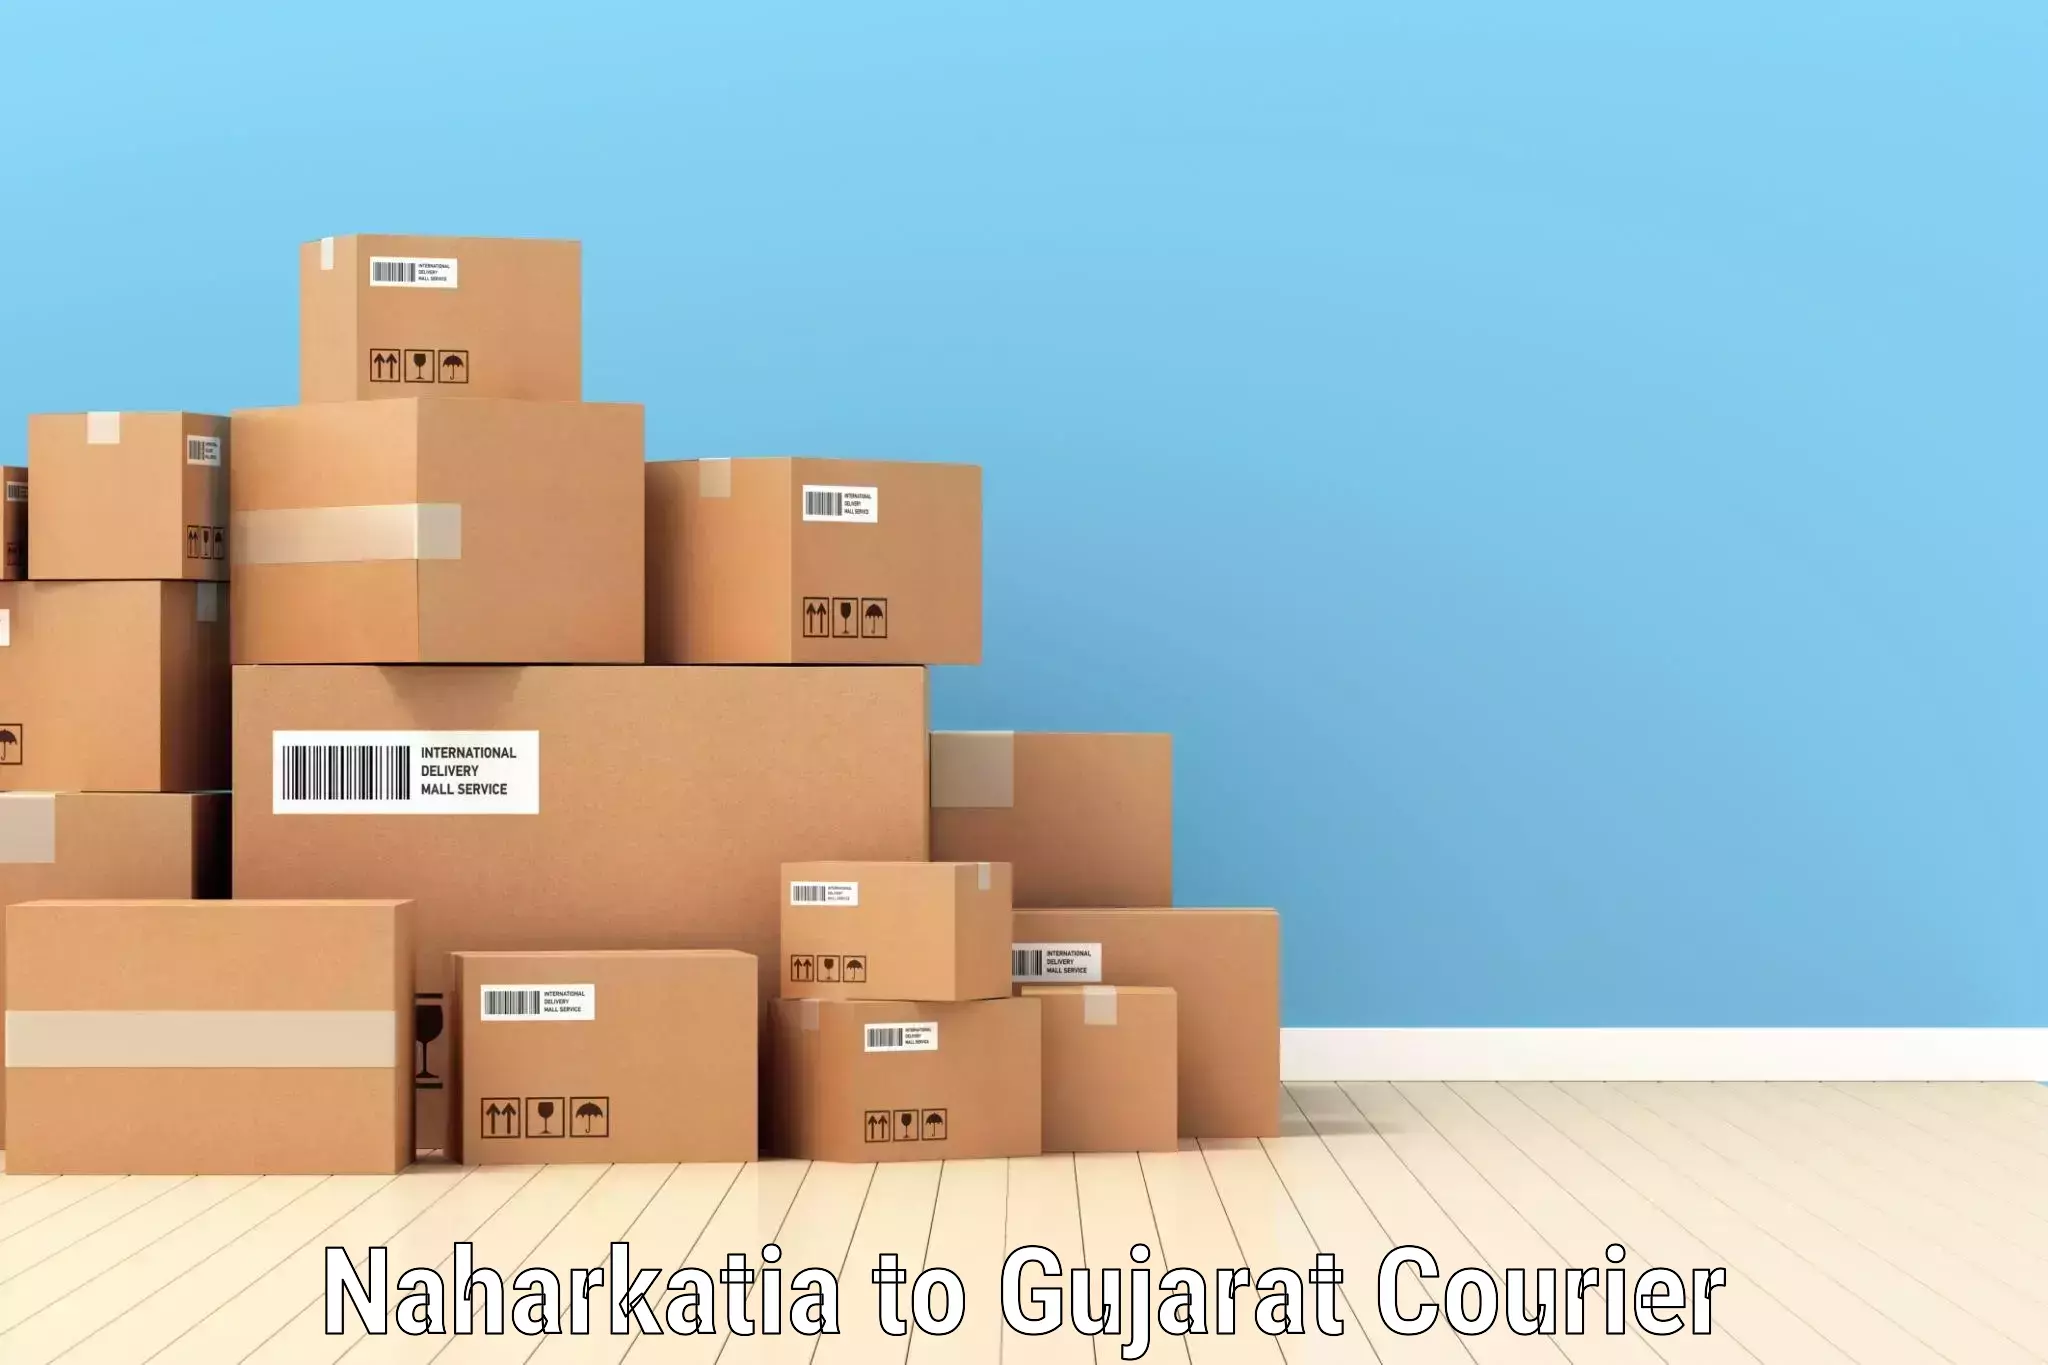 Courier service comparison Naharkatia to Ahmedabad